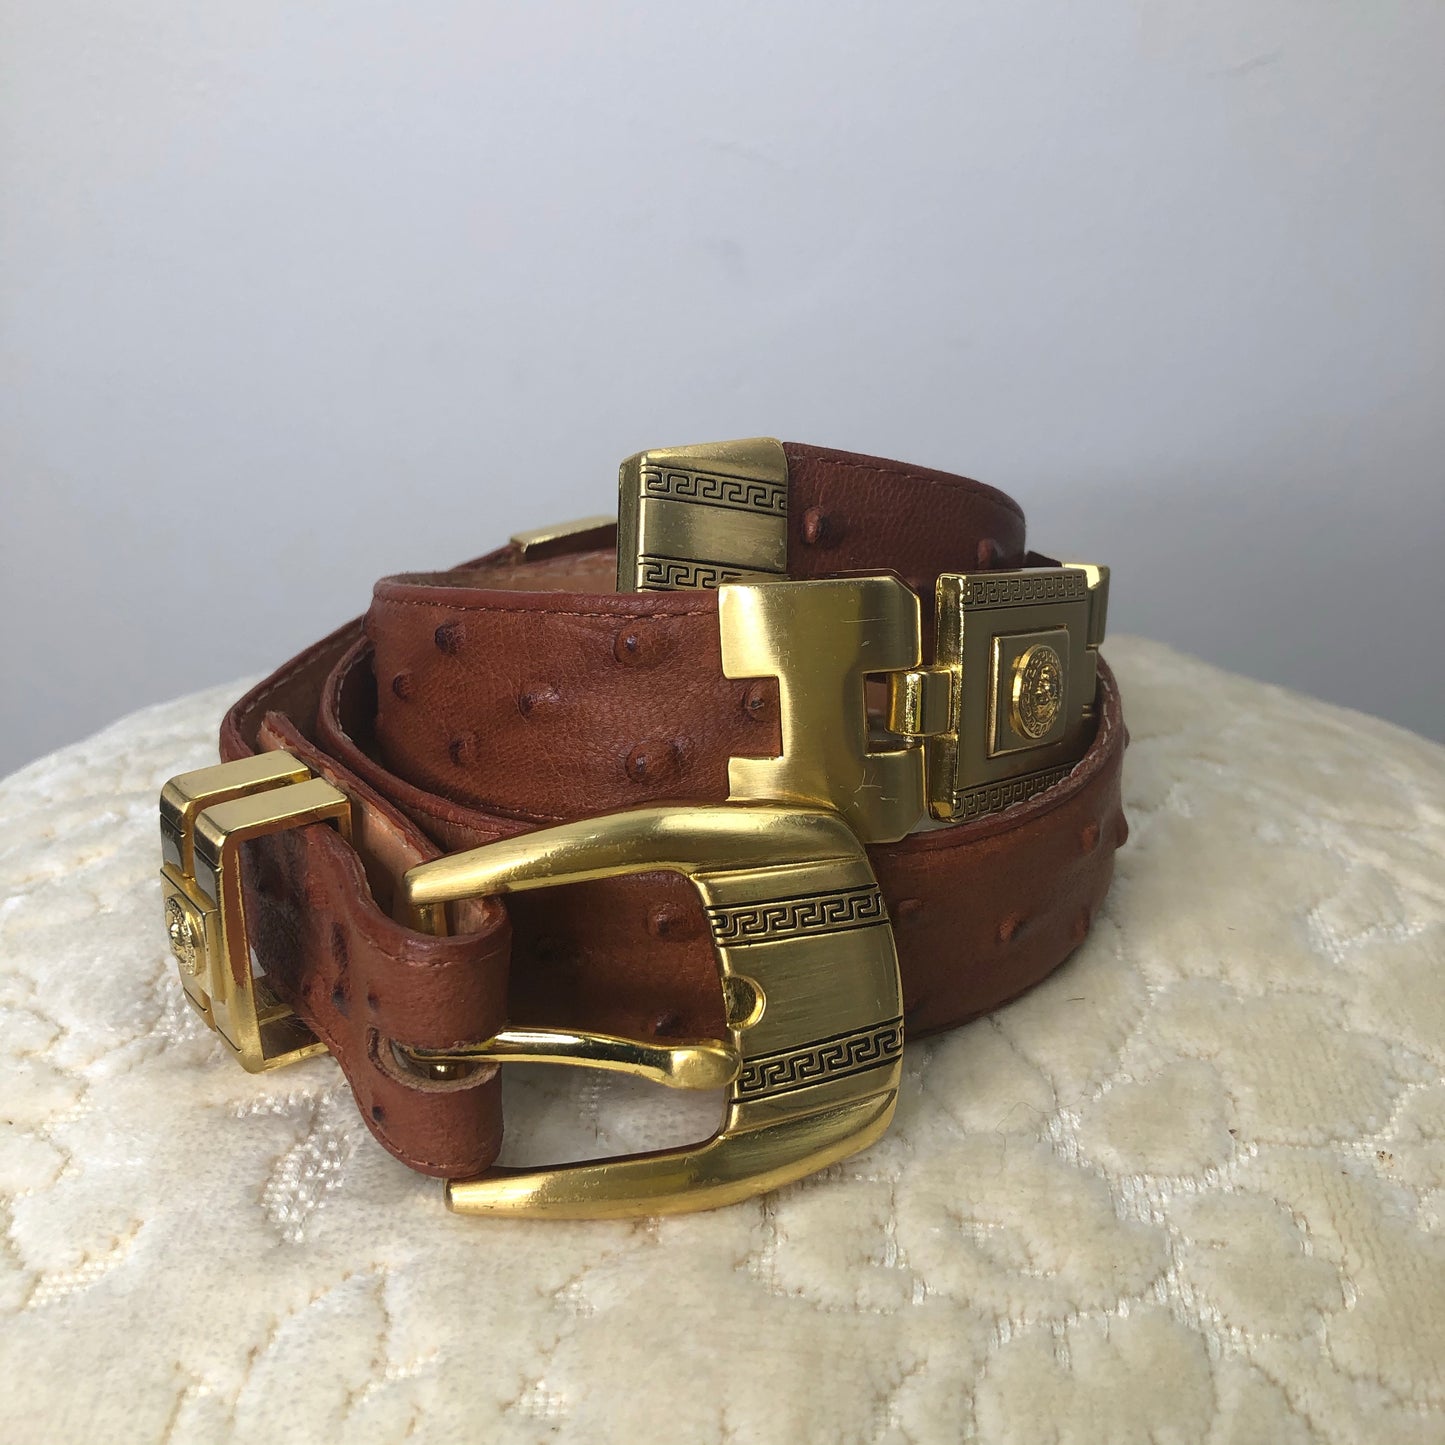 Gorgeous Carmel leather belt with gold hardware